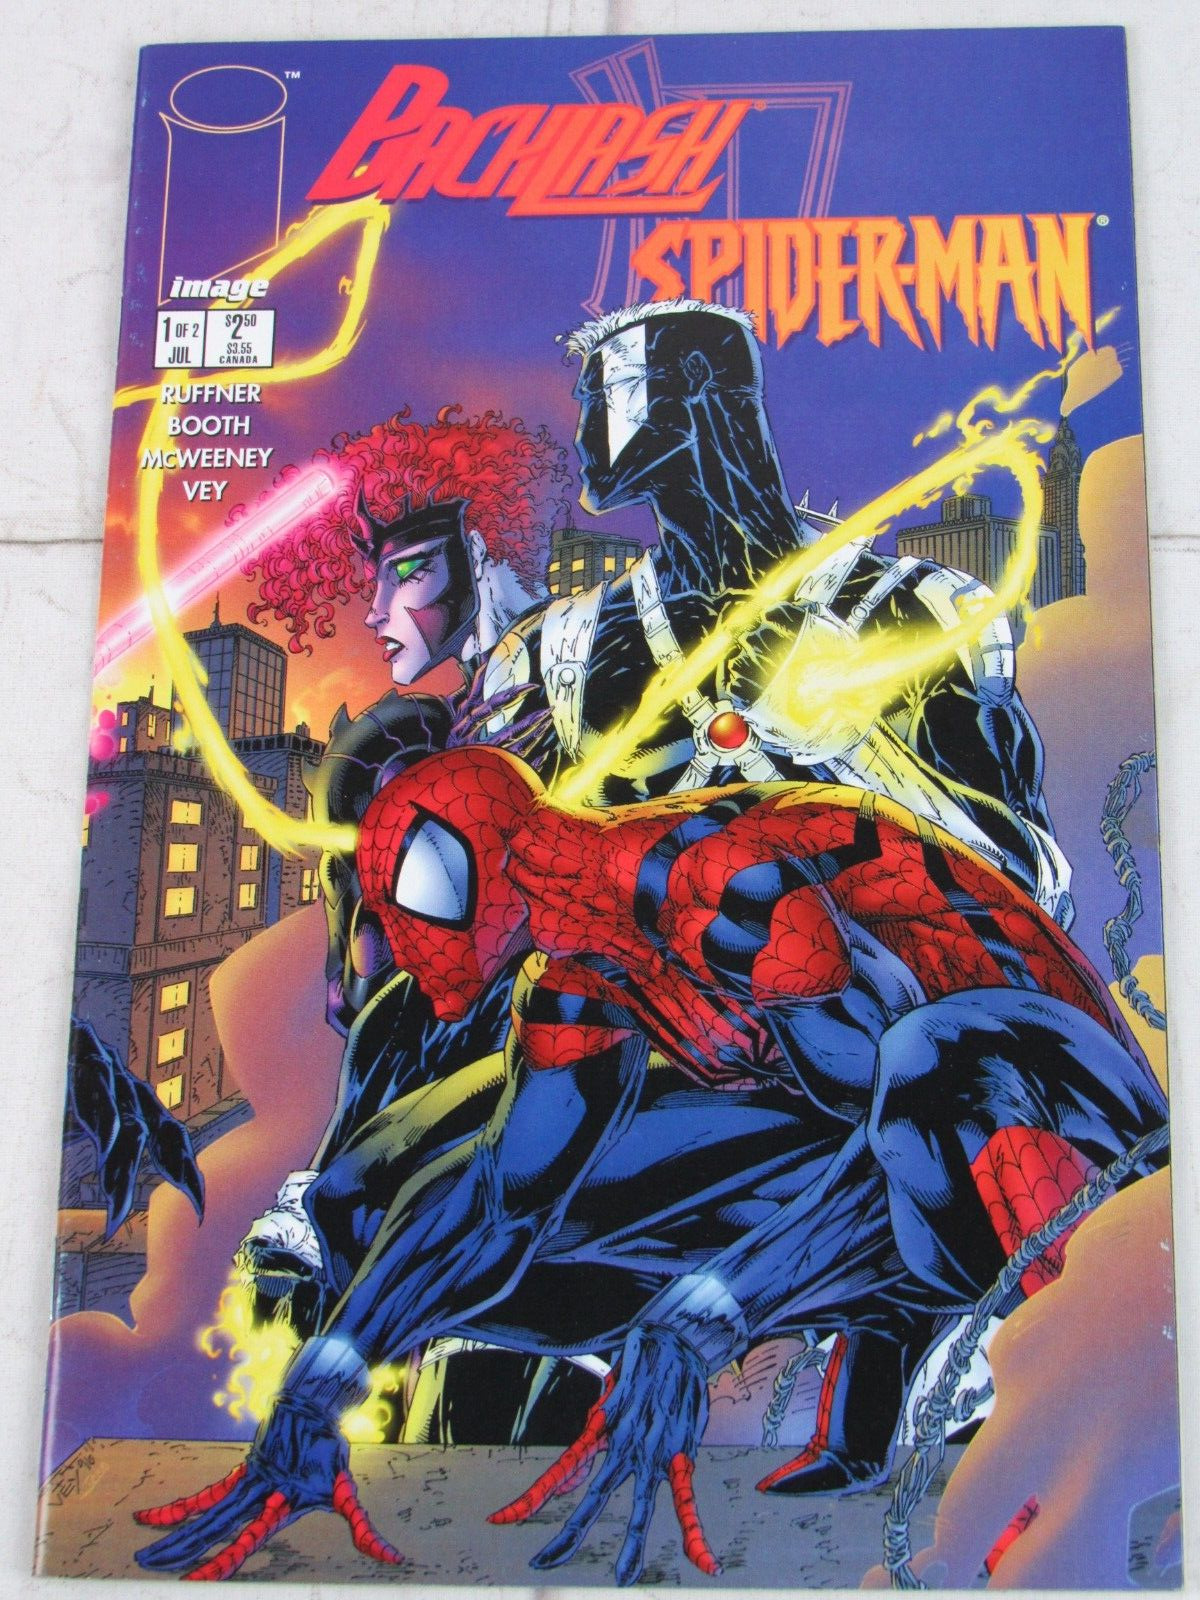 Backlash/Spider-Man #1 Aug. 1996 Image Comics